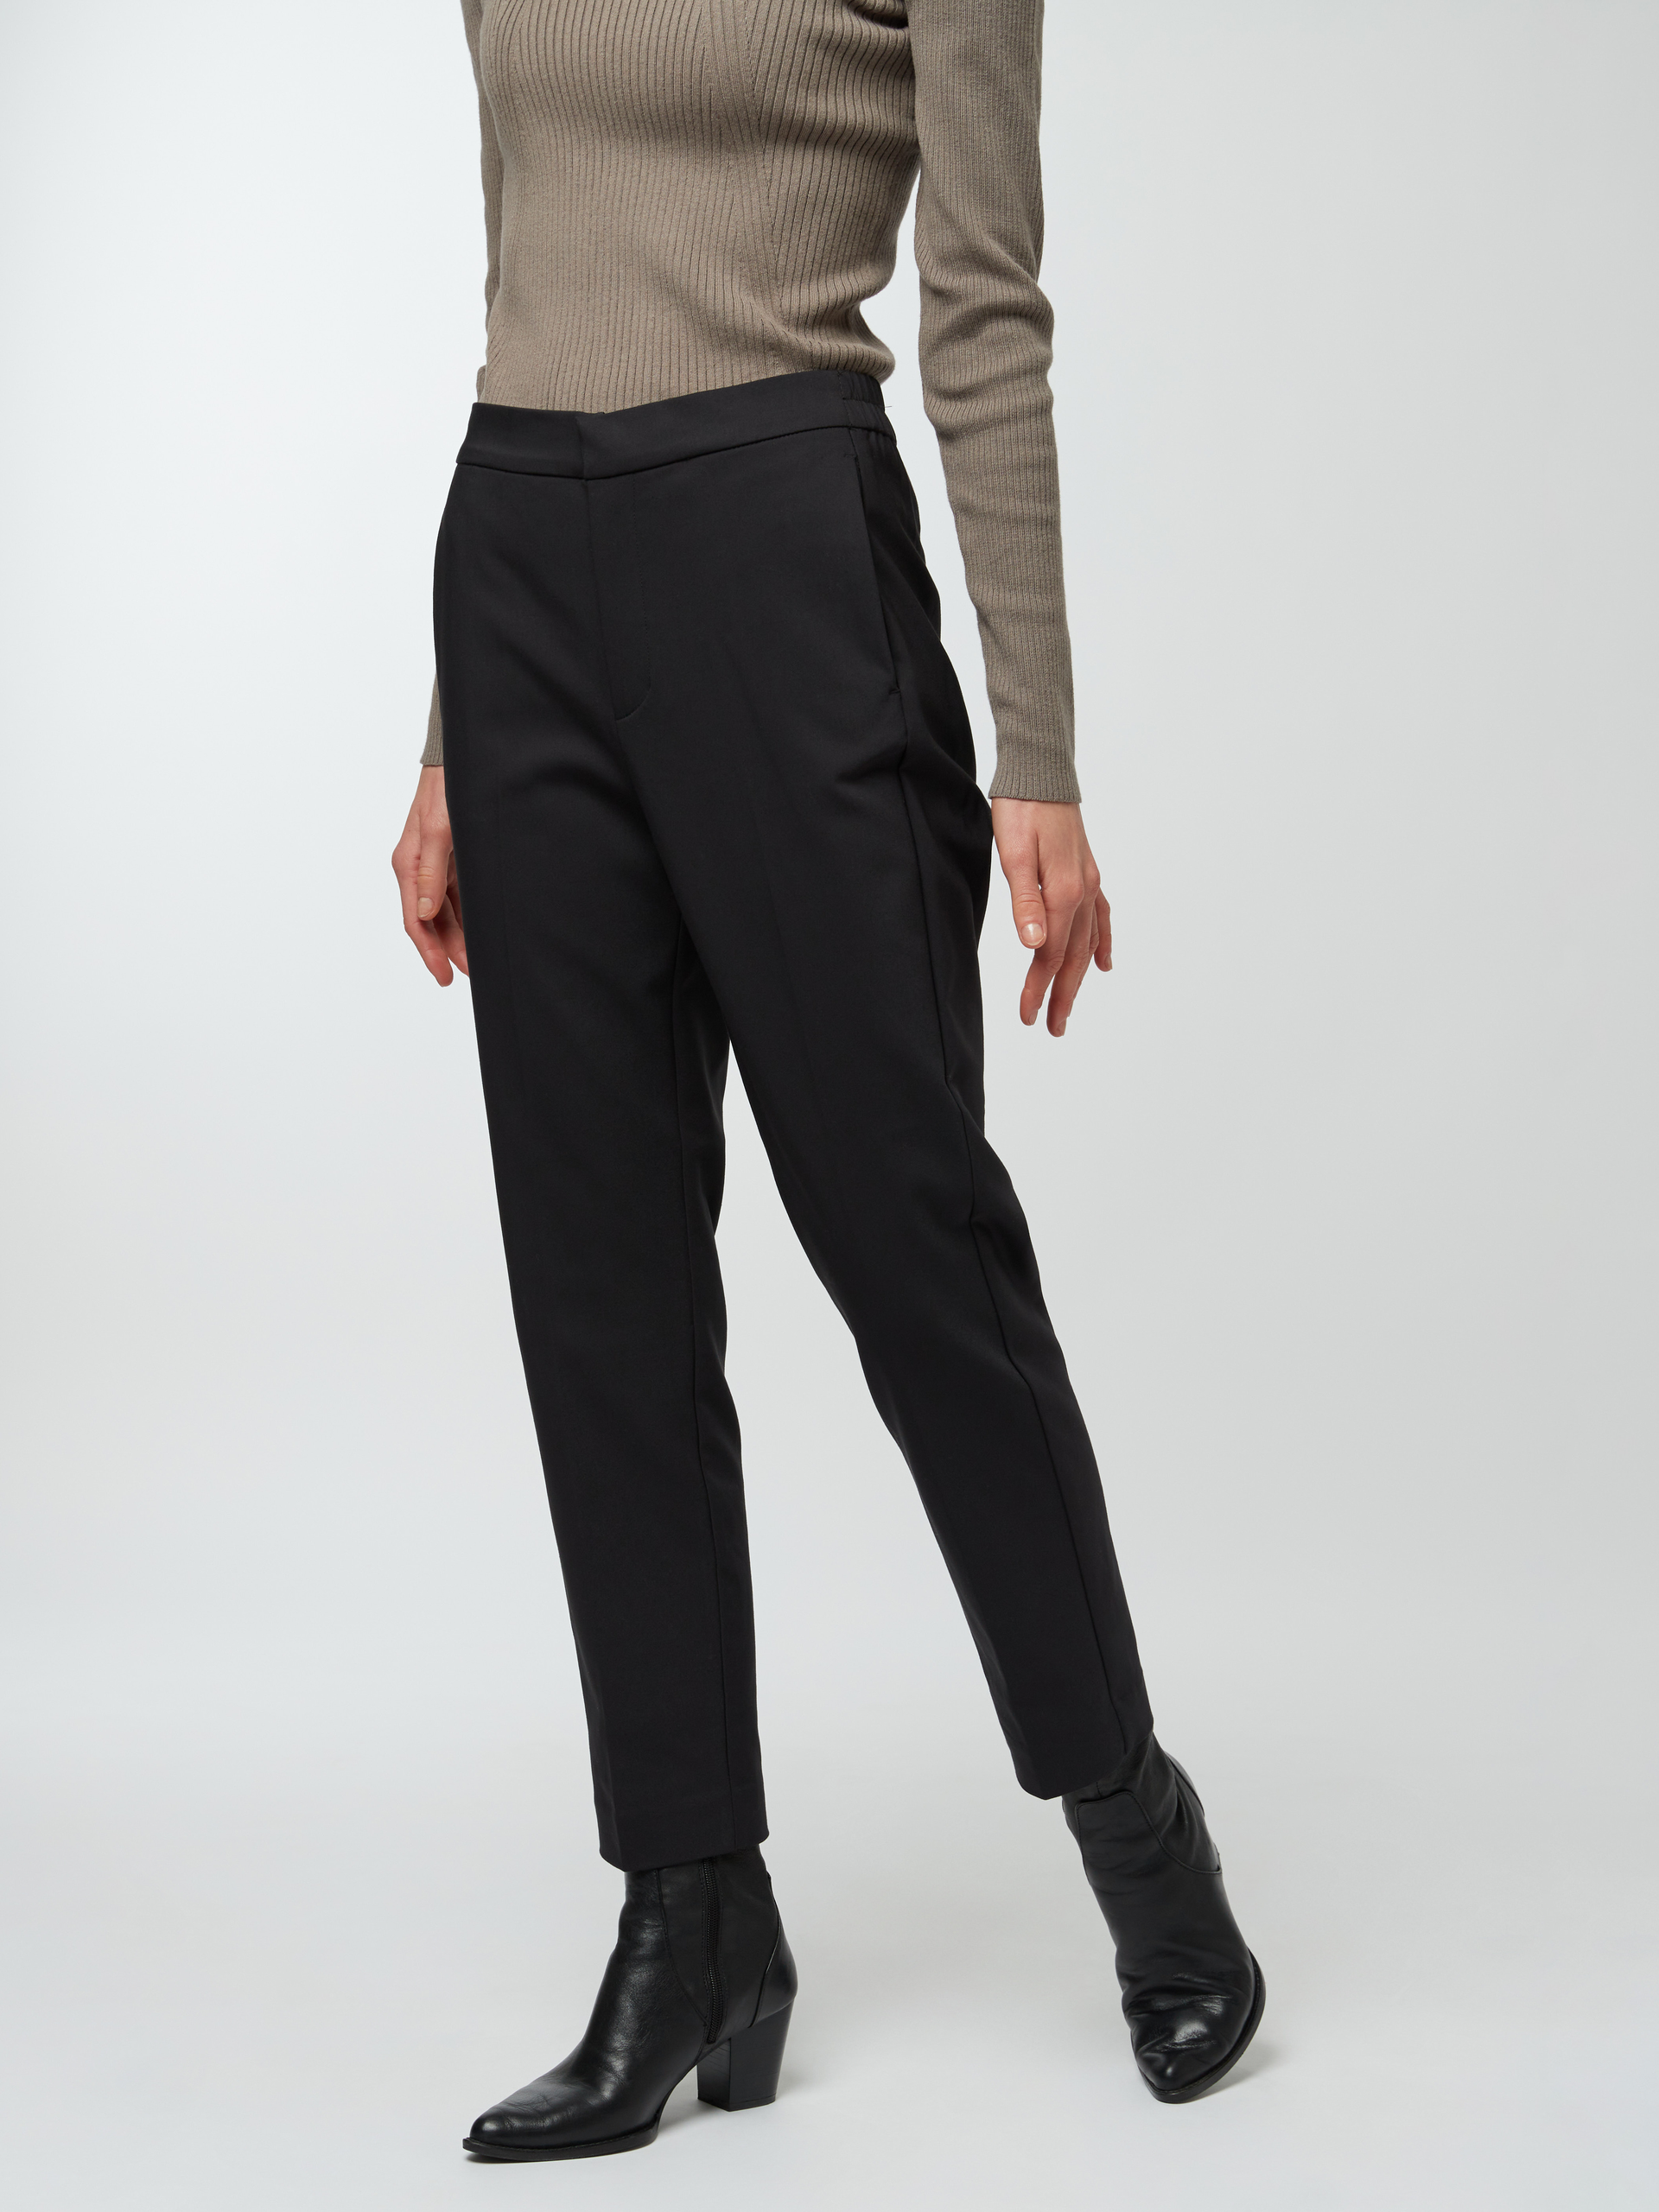 Black Zella IW pants from InWear – Shop Black Zella IW pants from size  32-46 here